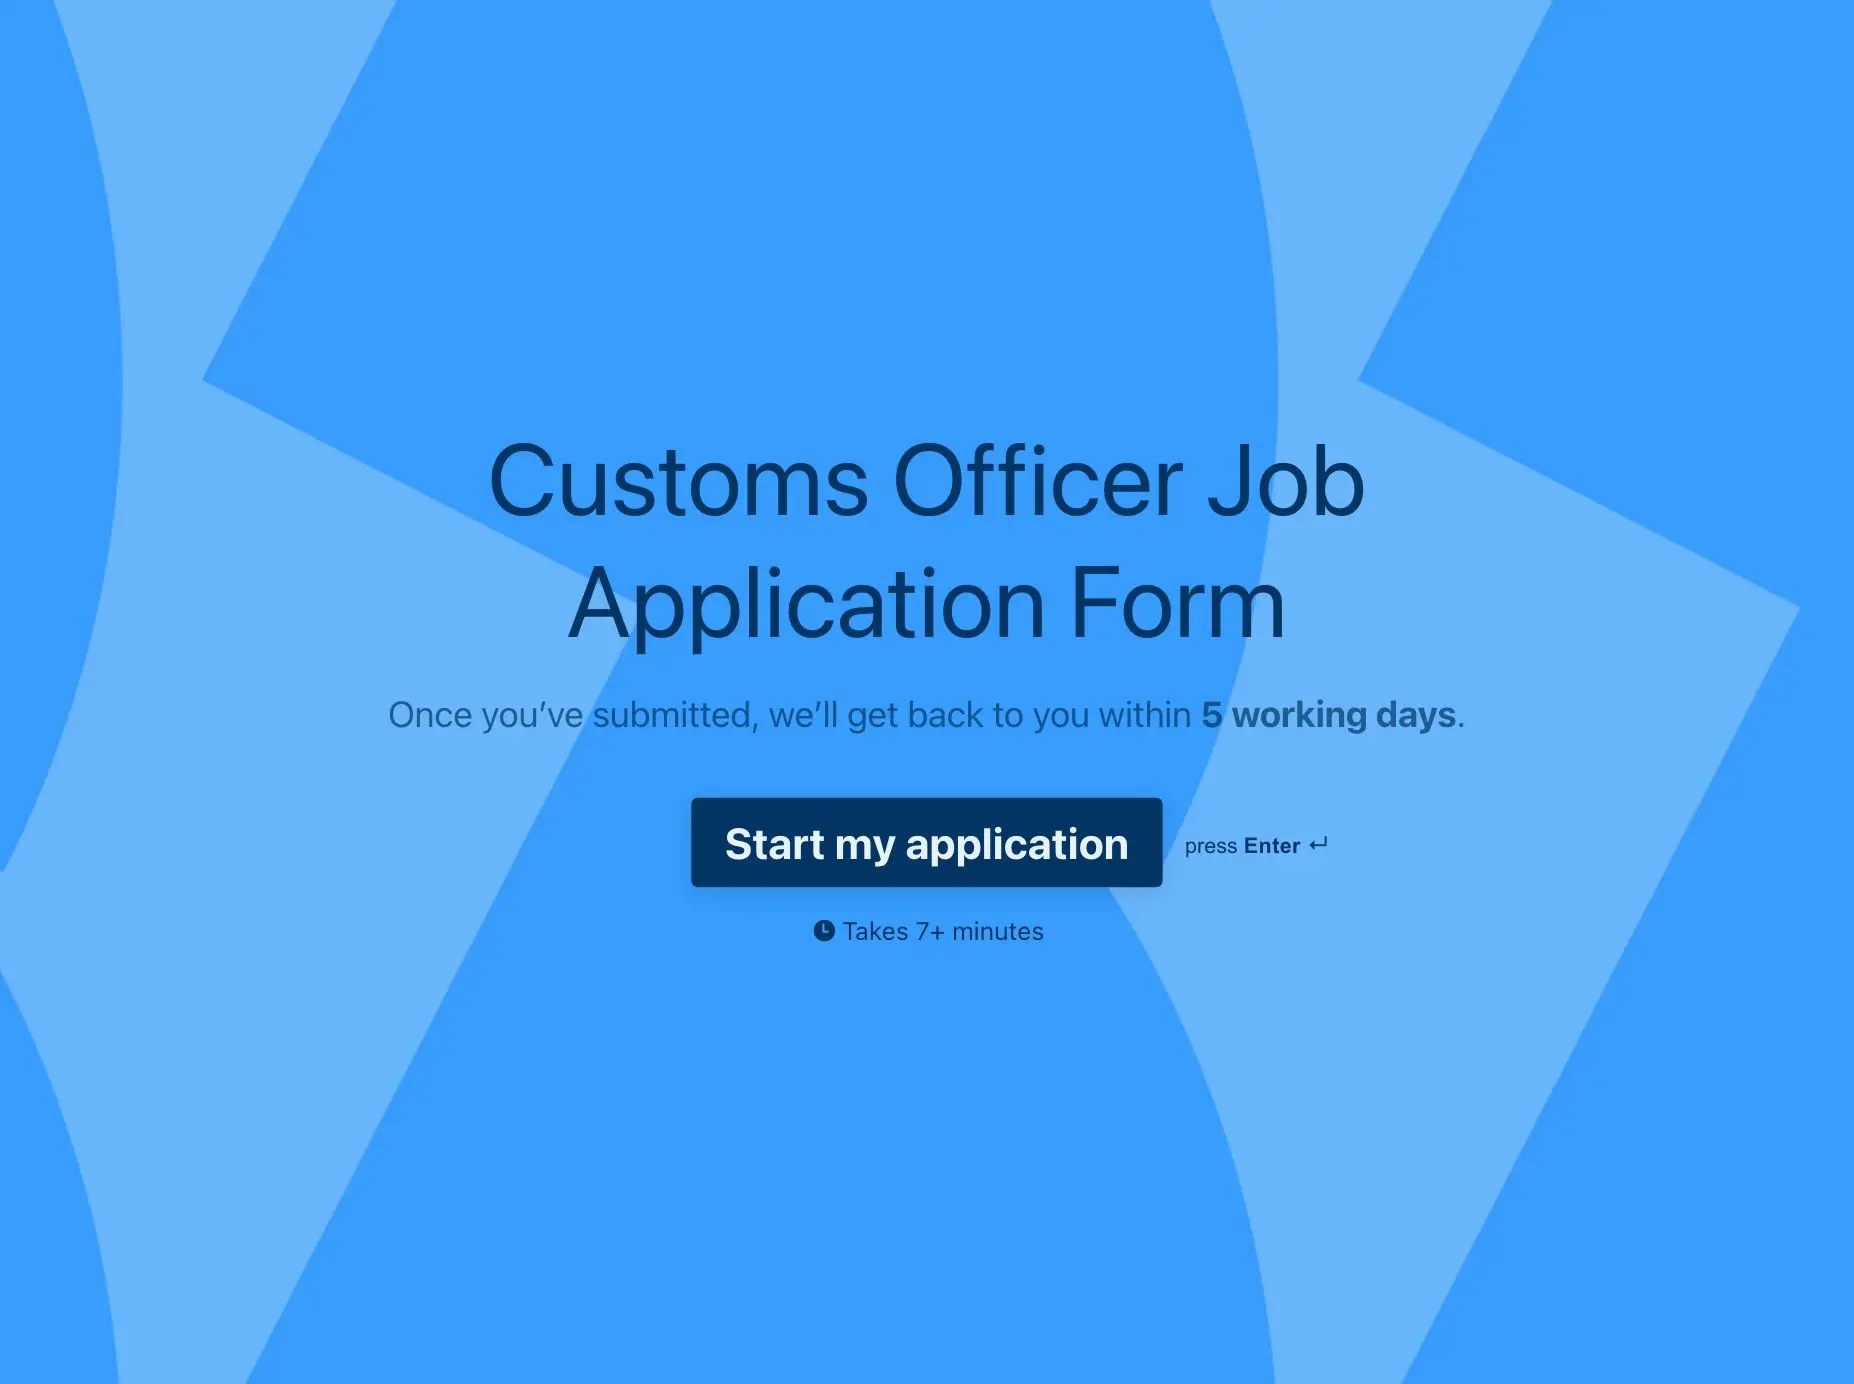 Customs Officer Job Application Form Template Hero